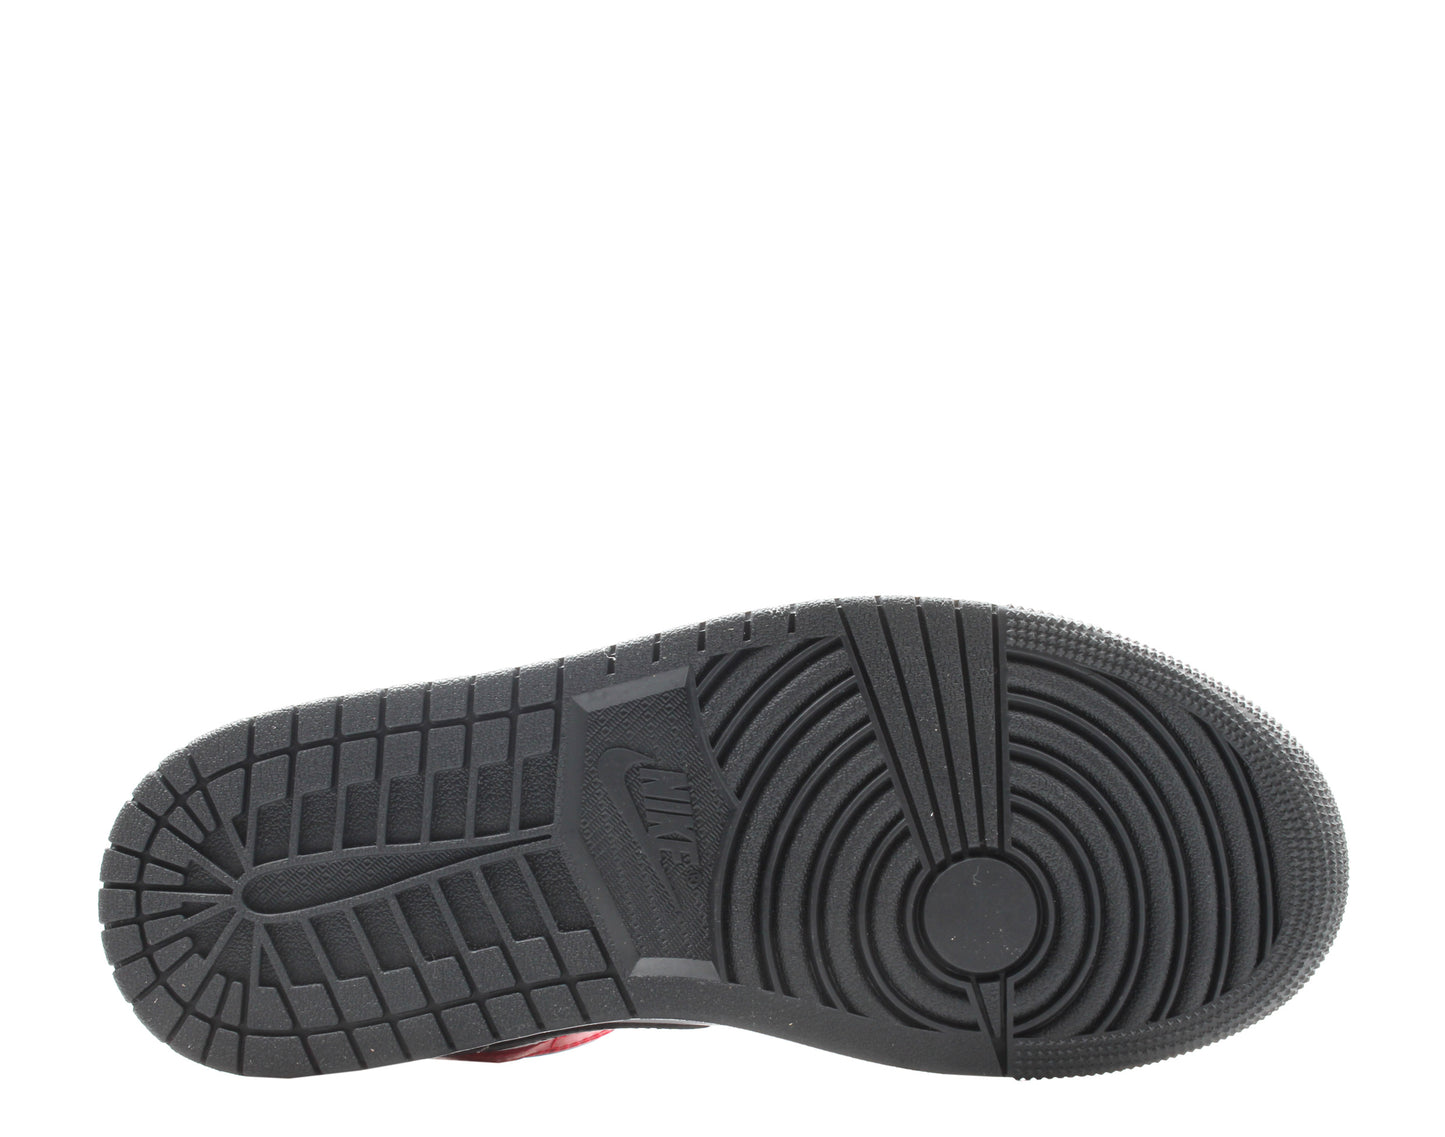 Nike Air Jordan 1 Mid Black Toe Chicago Men's Basketball Shoes 554724-069